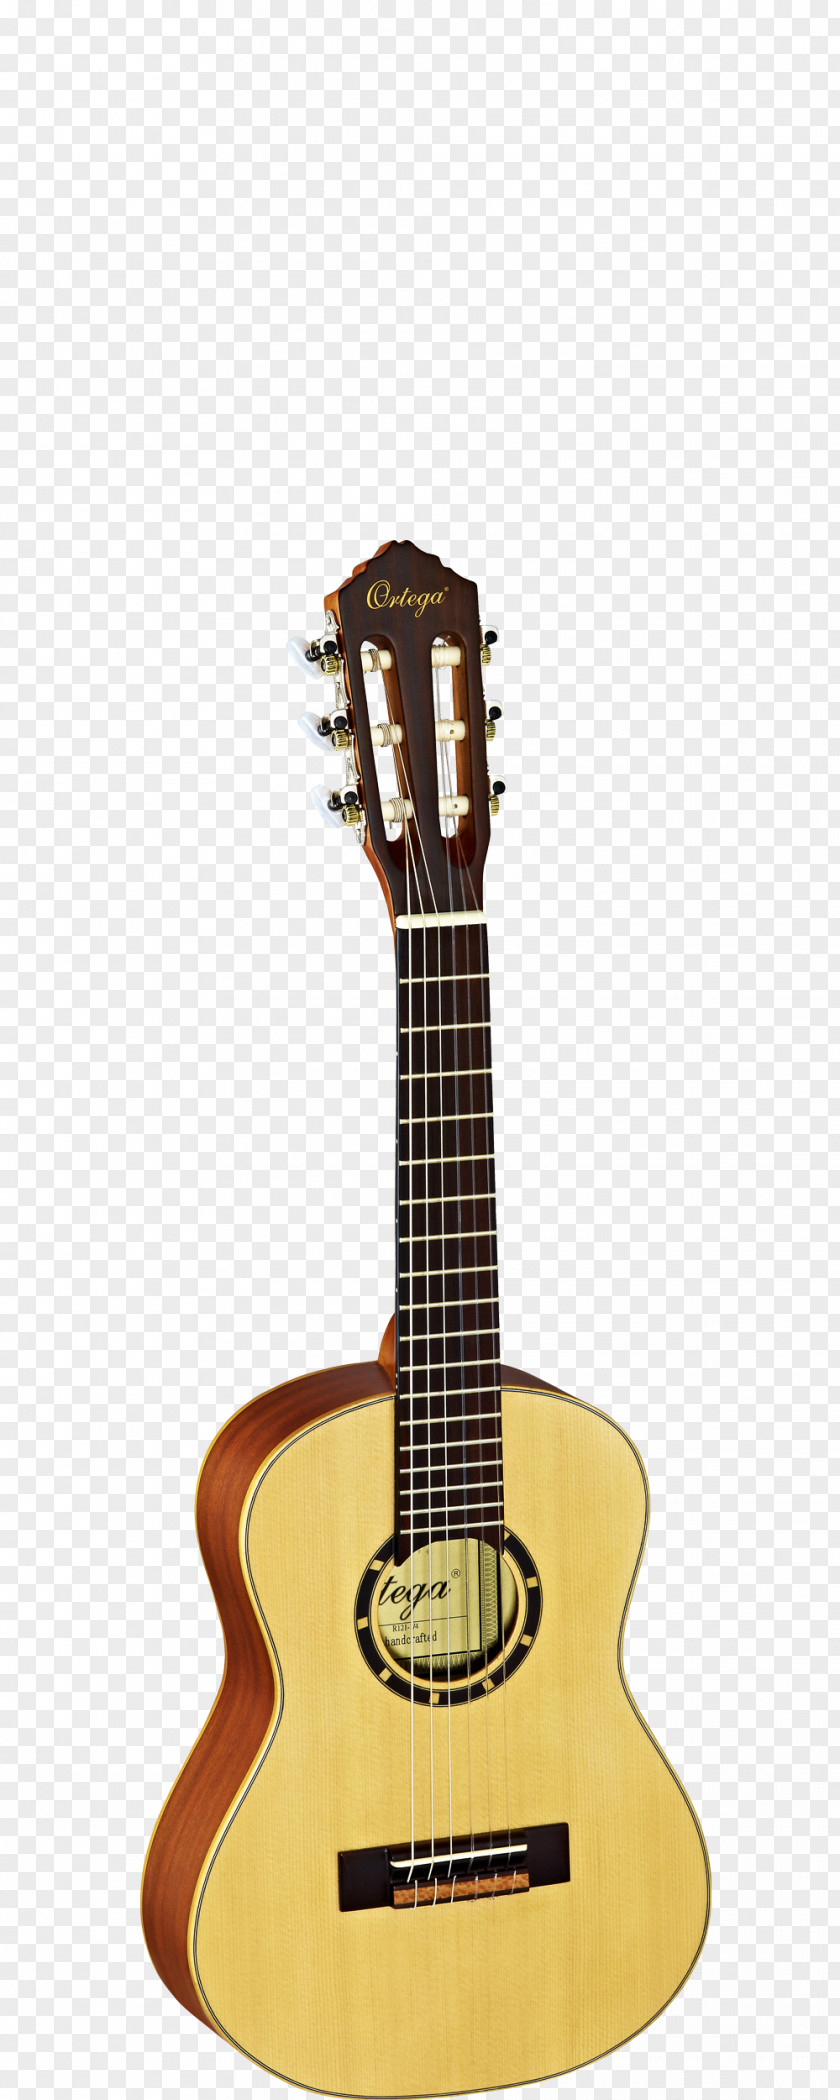 Amancio Ortega Ukulele Classical Guitar String Instruments PNG